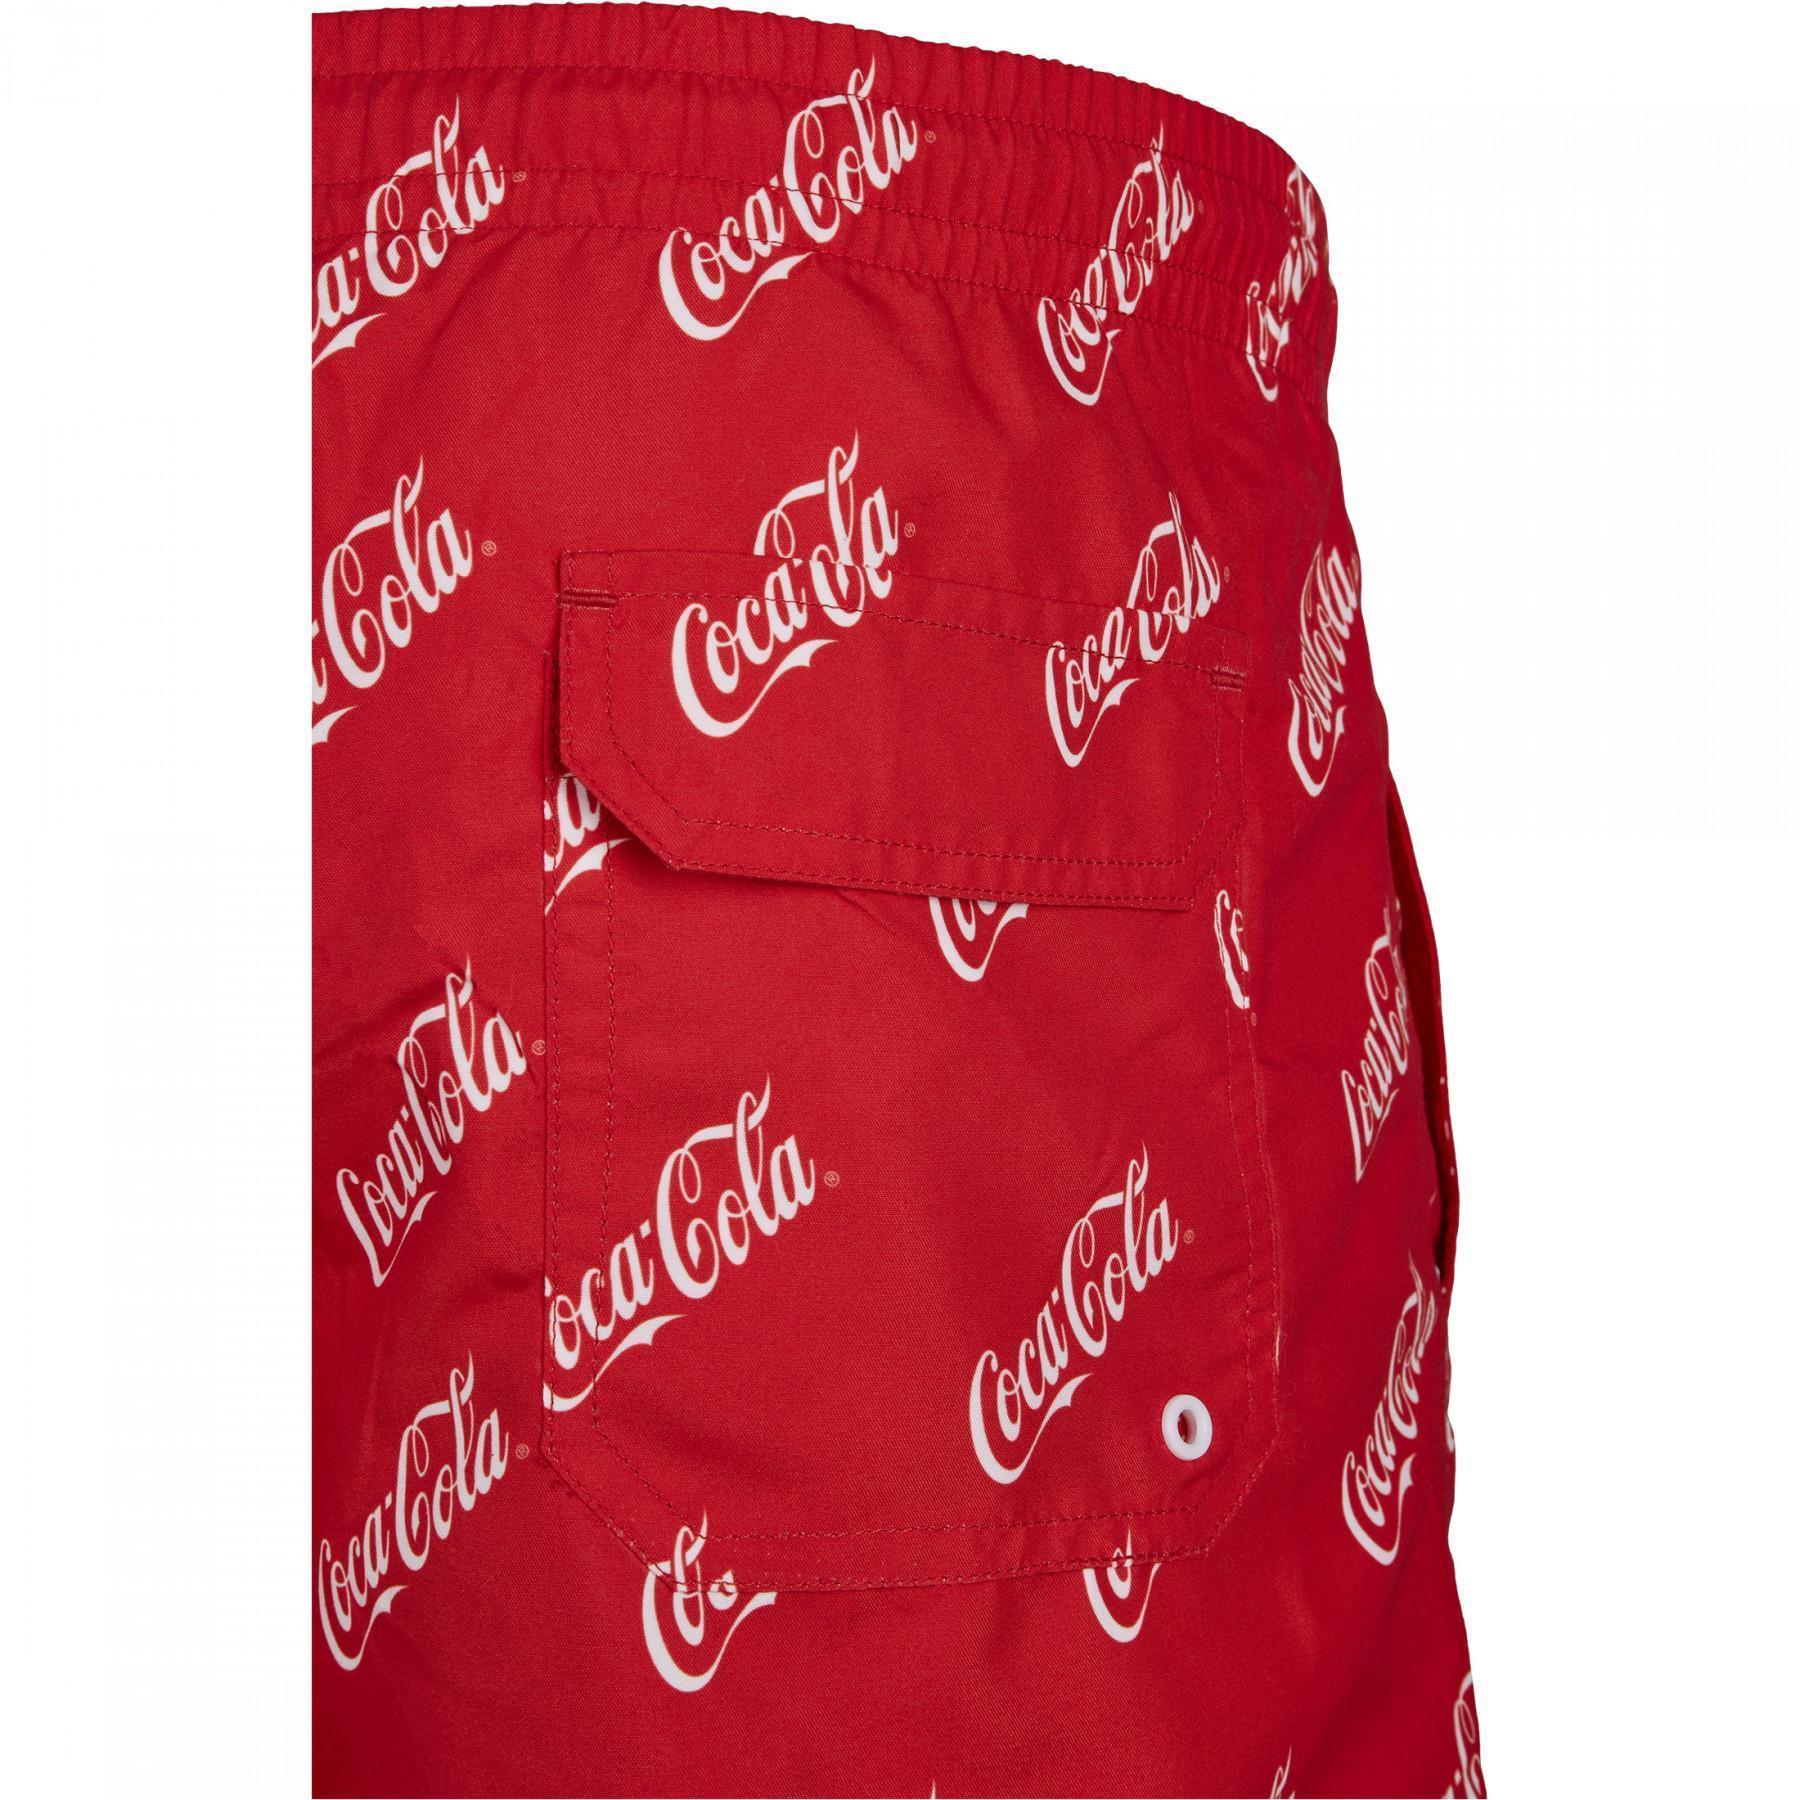 Urban classic coca cola badshorts